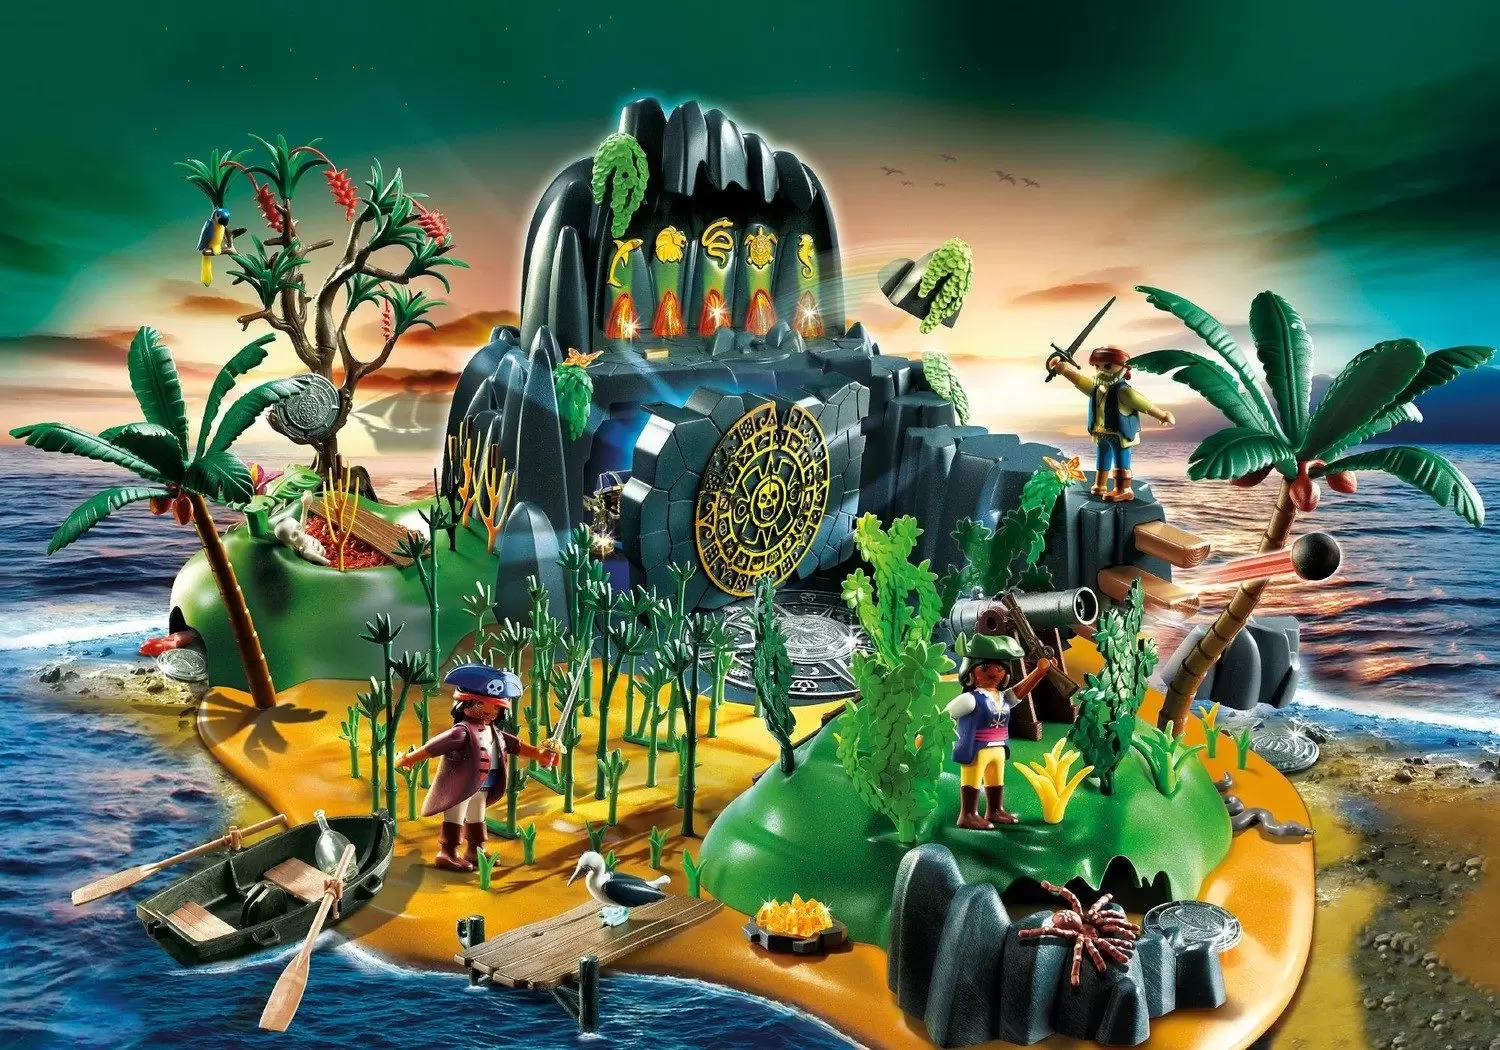 Pirate Playmobil - Pirates adventure Island